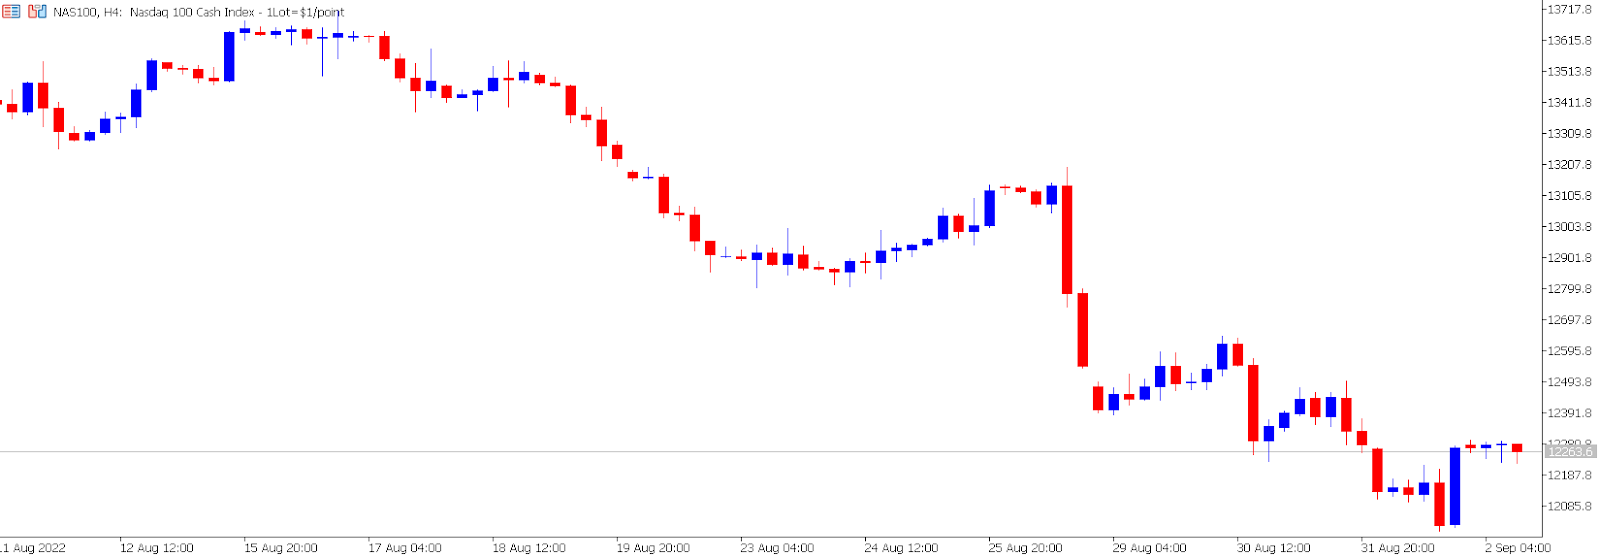 NASDAQ 4-hour price chart.